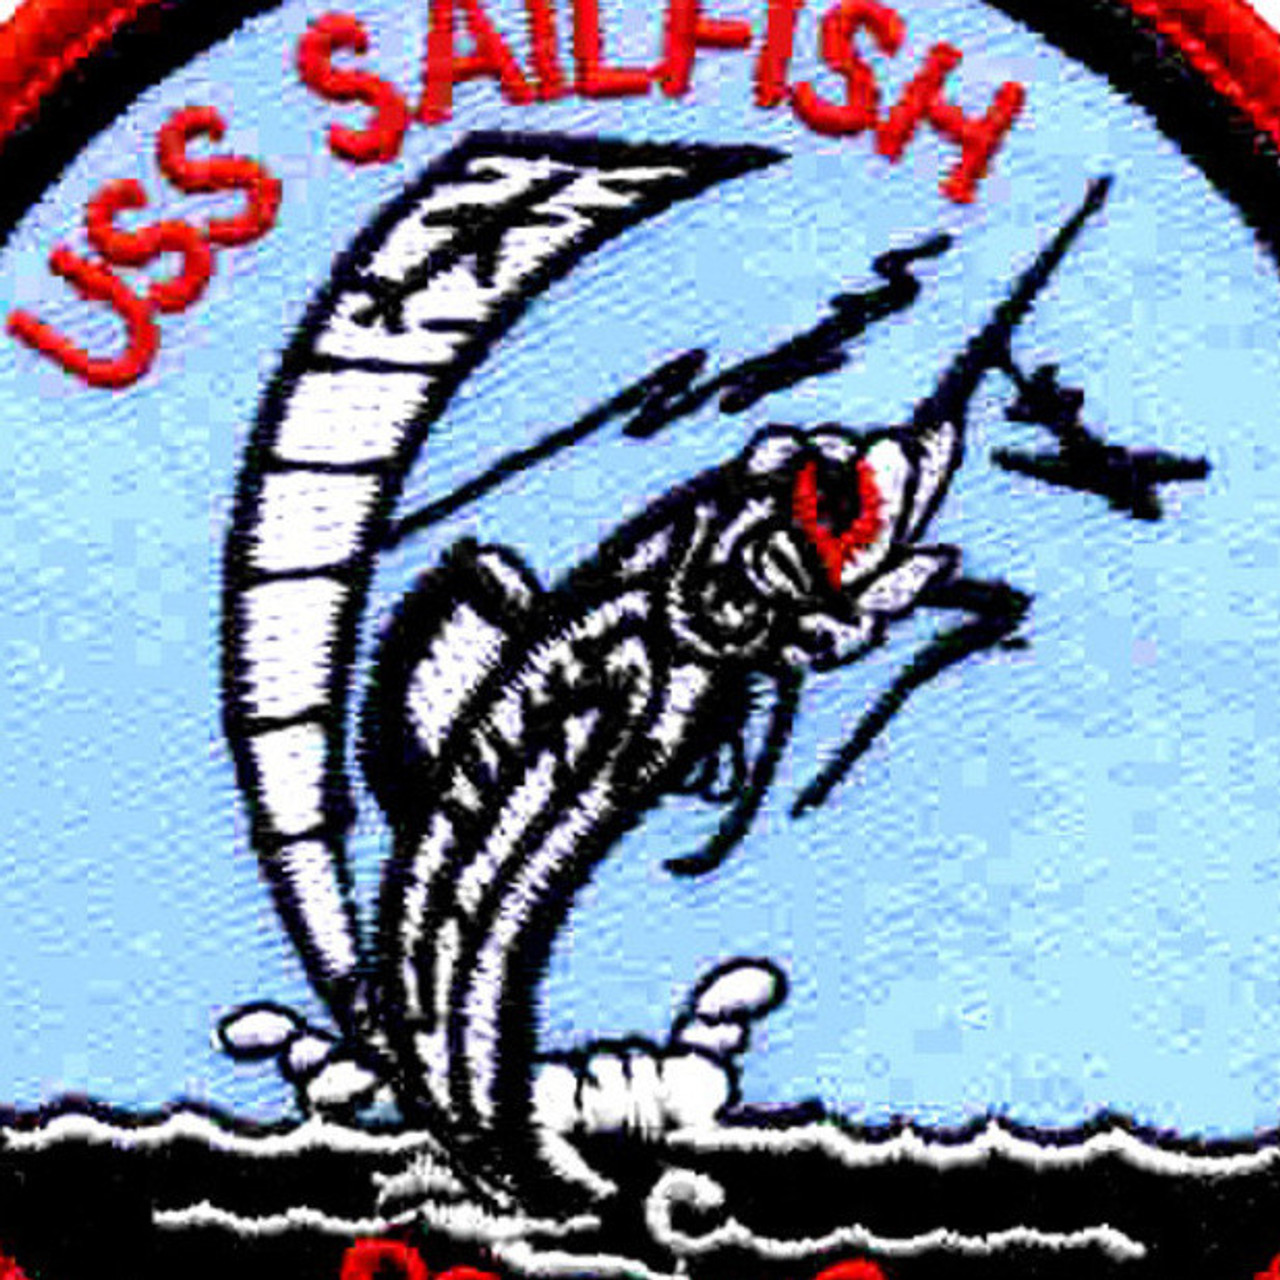 USS Sailfish SS 572 - Framed Navy Ship Display